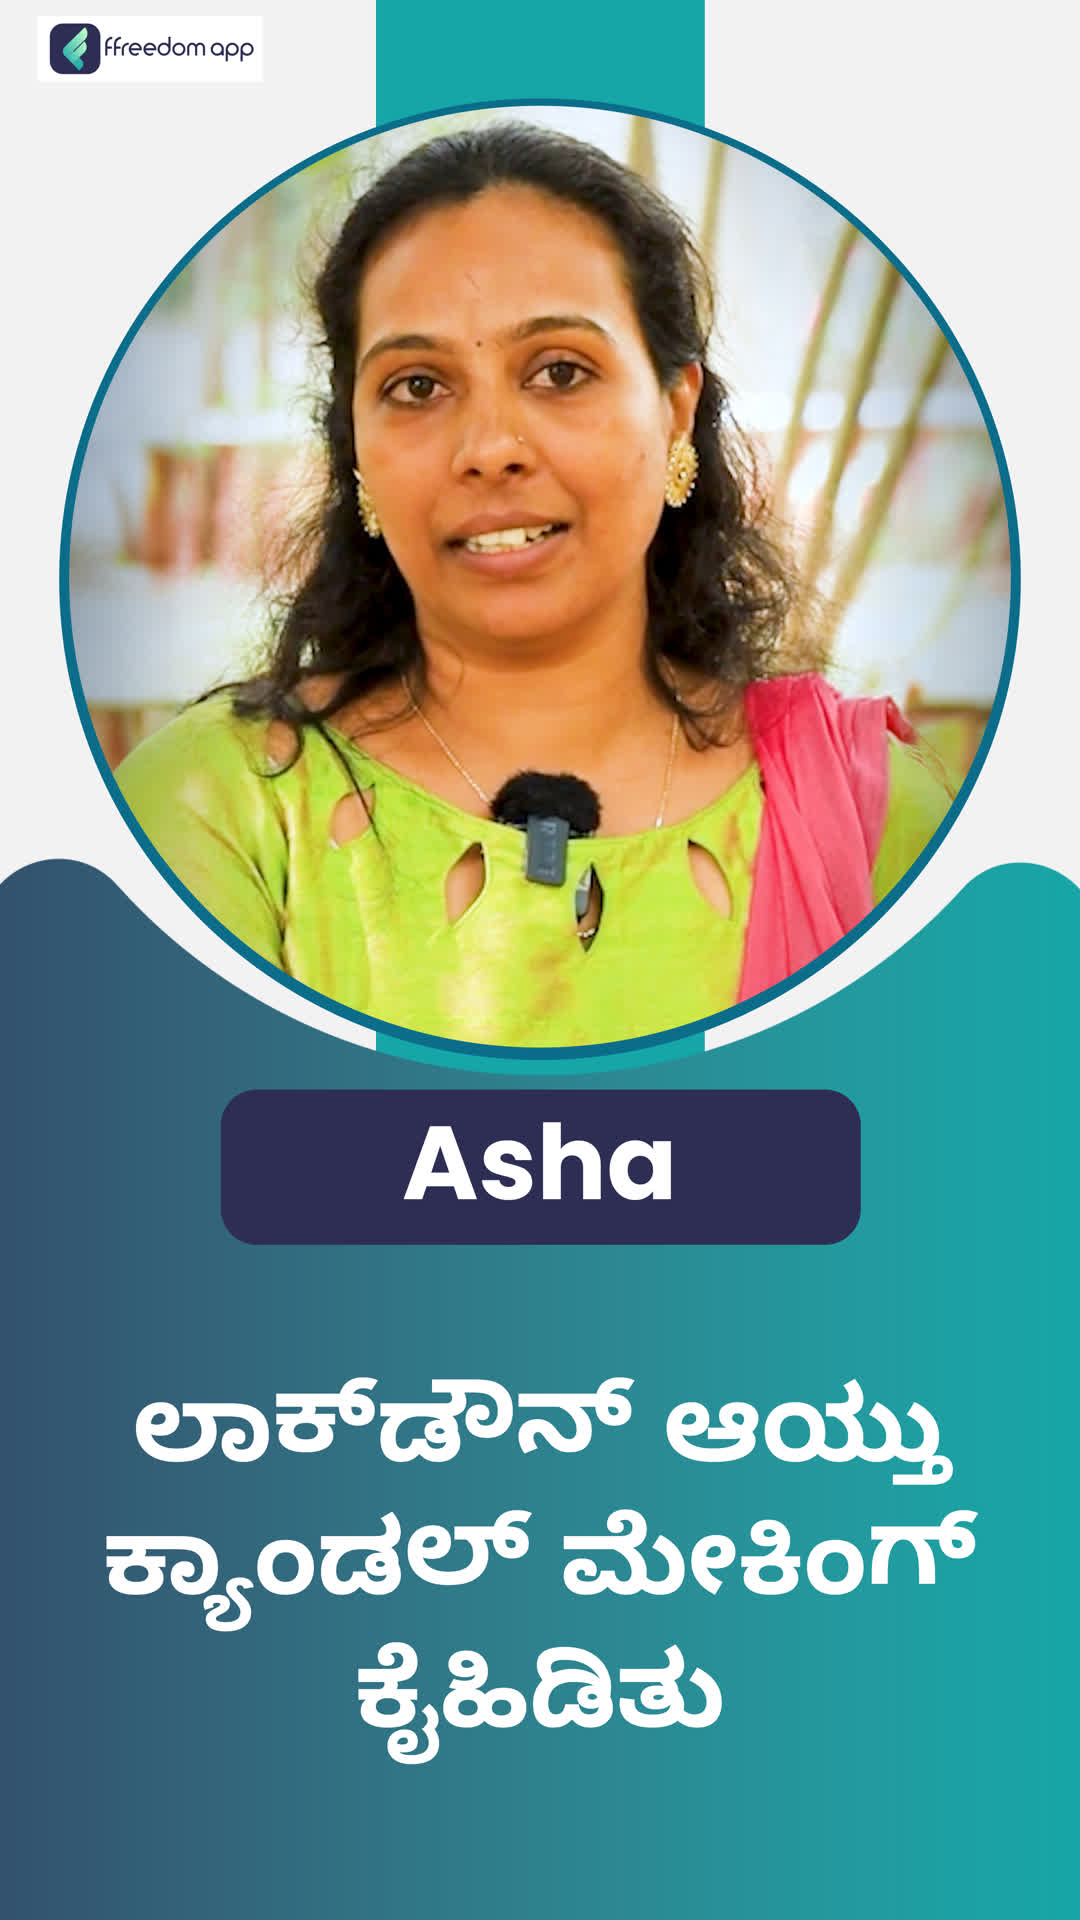 Asha's Honest Review of ffreedom app  Karnataka